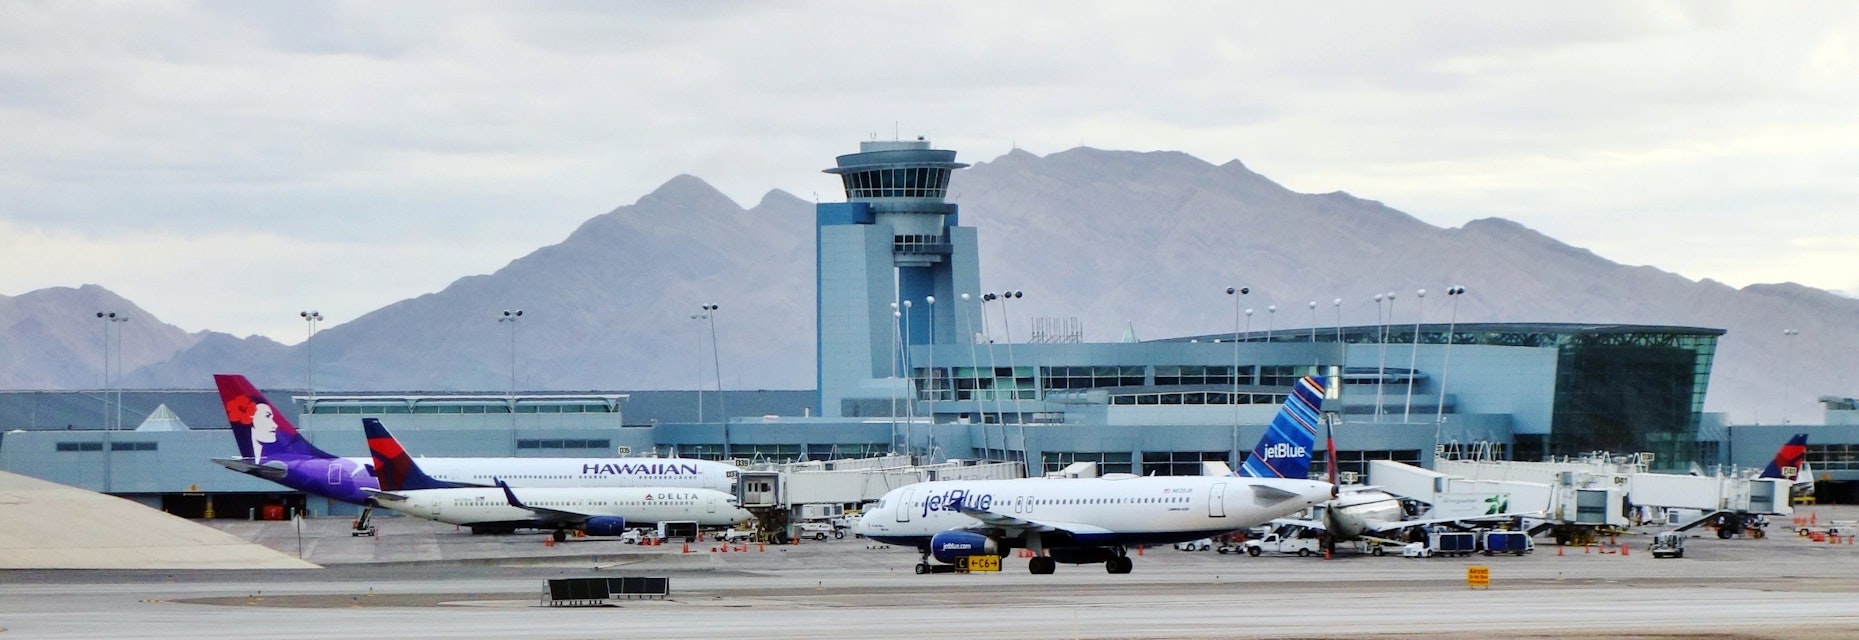 McCarran International Airport in Las Vegas - The Largest Airport in Las  Vegas – Go Guides